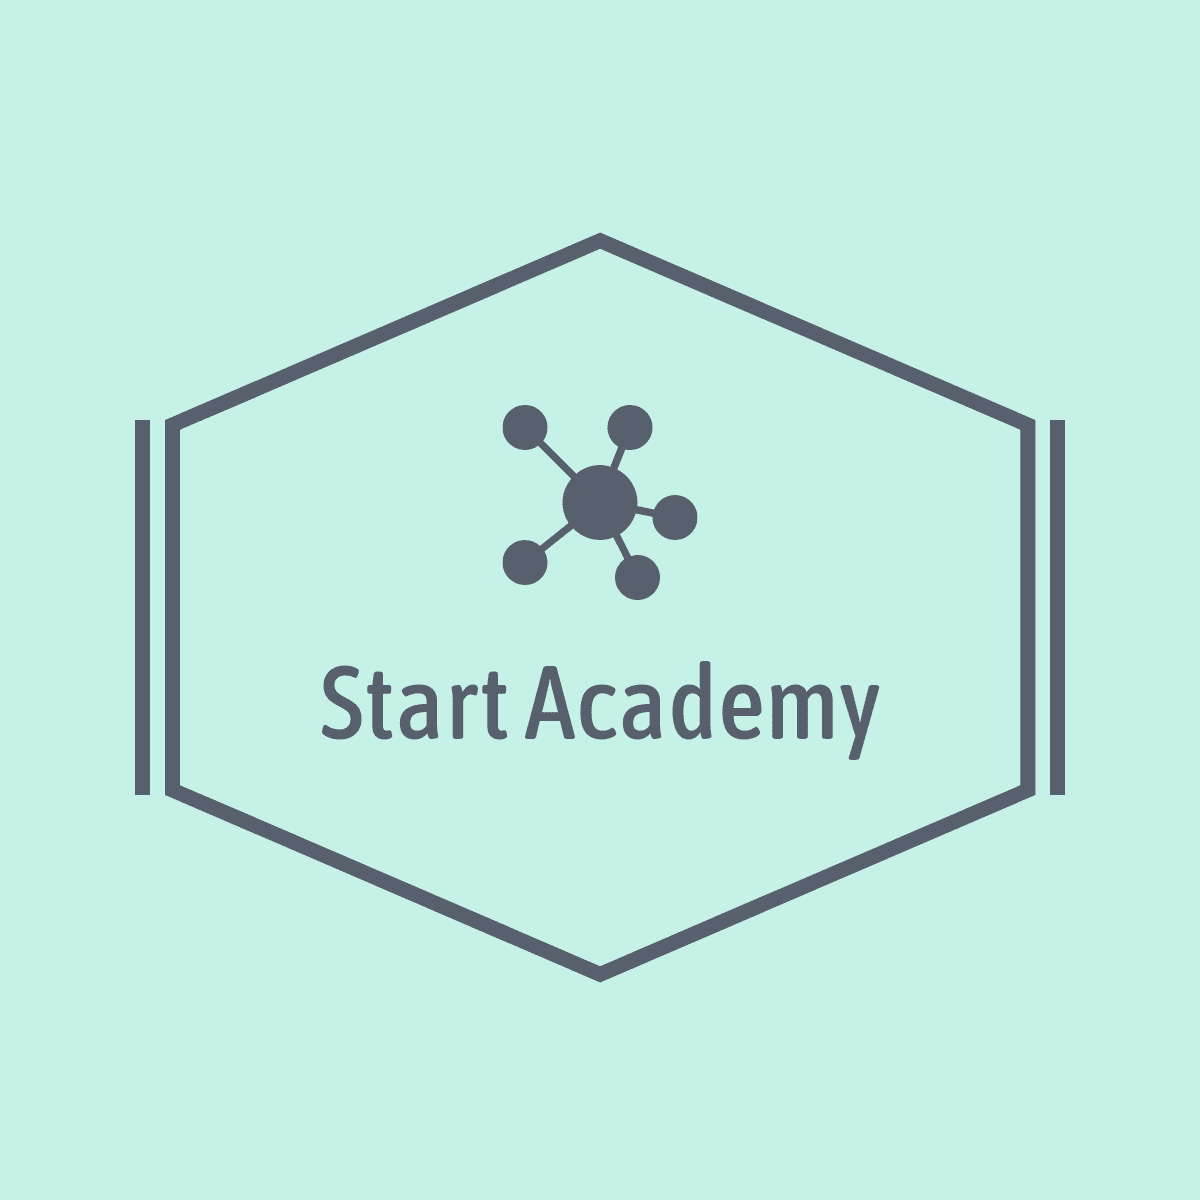 Start Academy logo